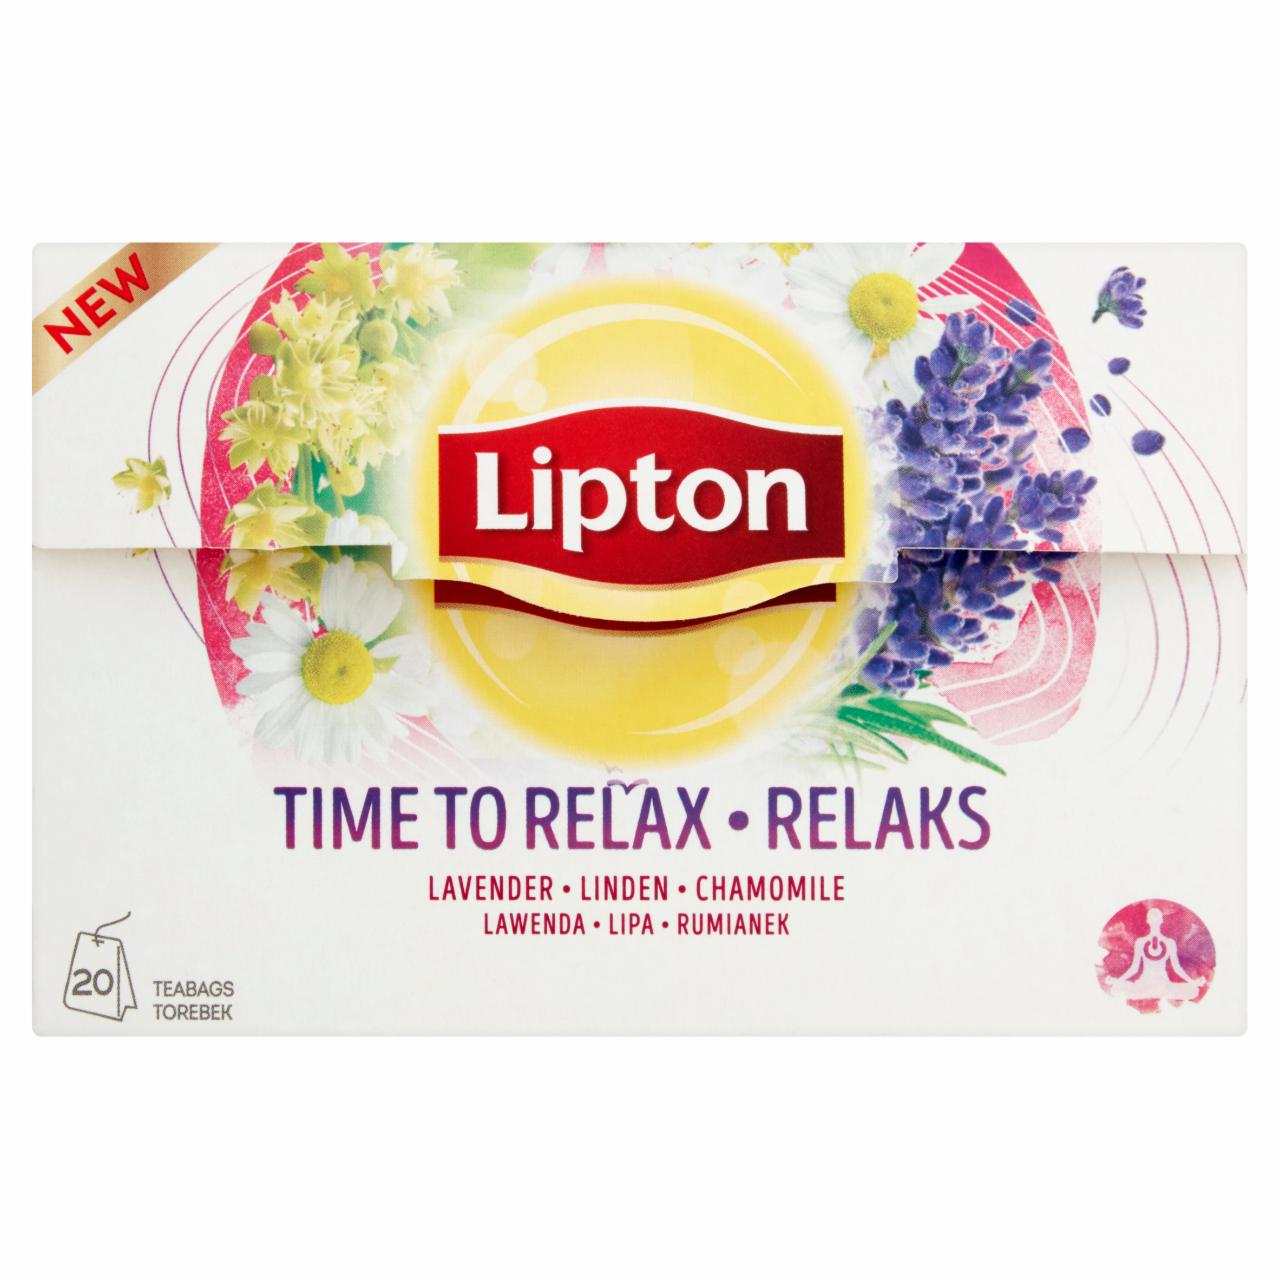 Zdjęcia - Lipton Relaks Herbatka ziołowa 30 g (20 torebek)